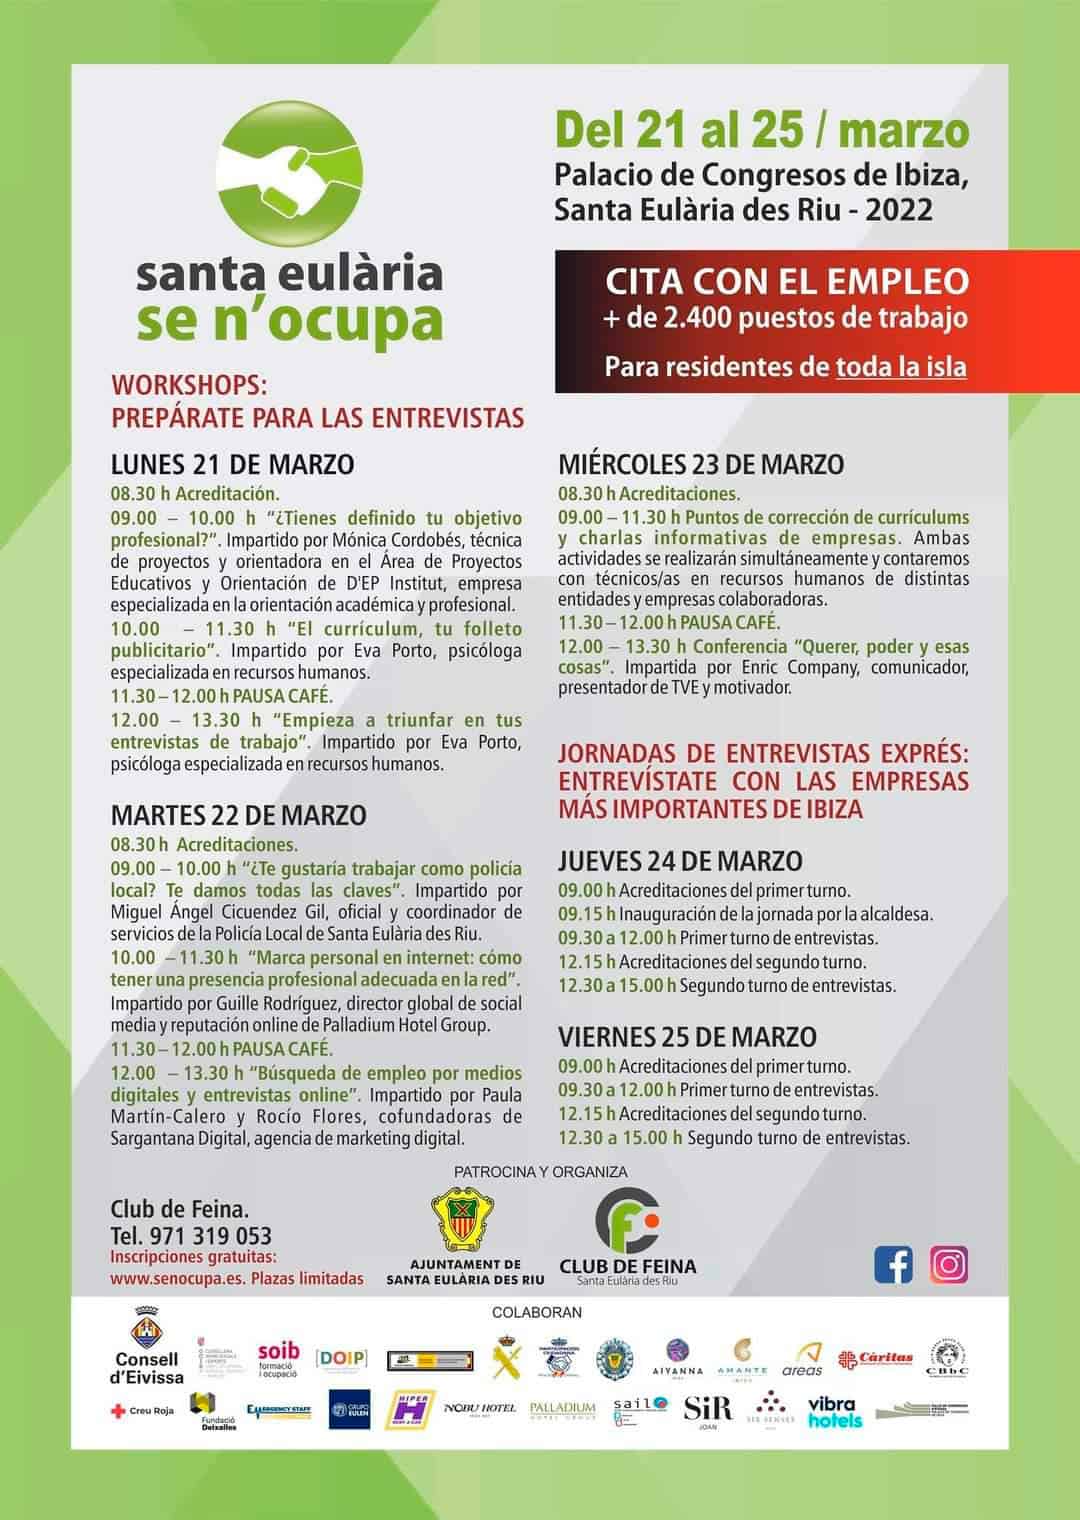 programme-santa-eulalia-is-n-occupied-ibiza-2022-welcometoibiza